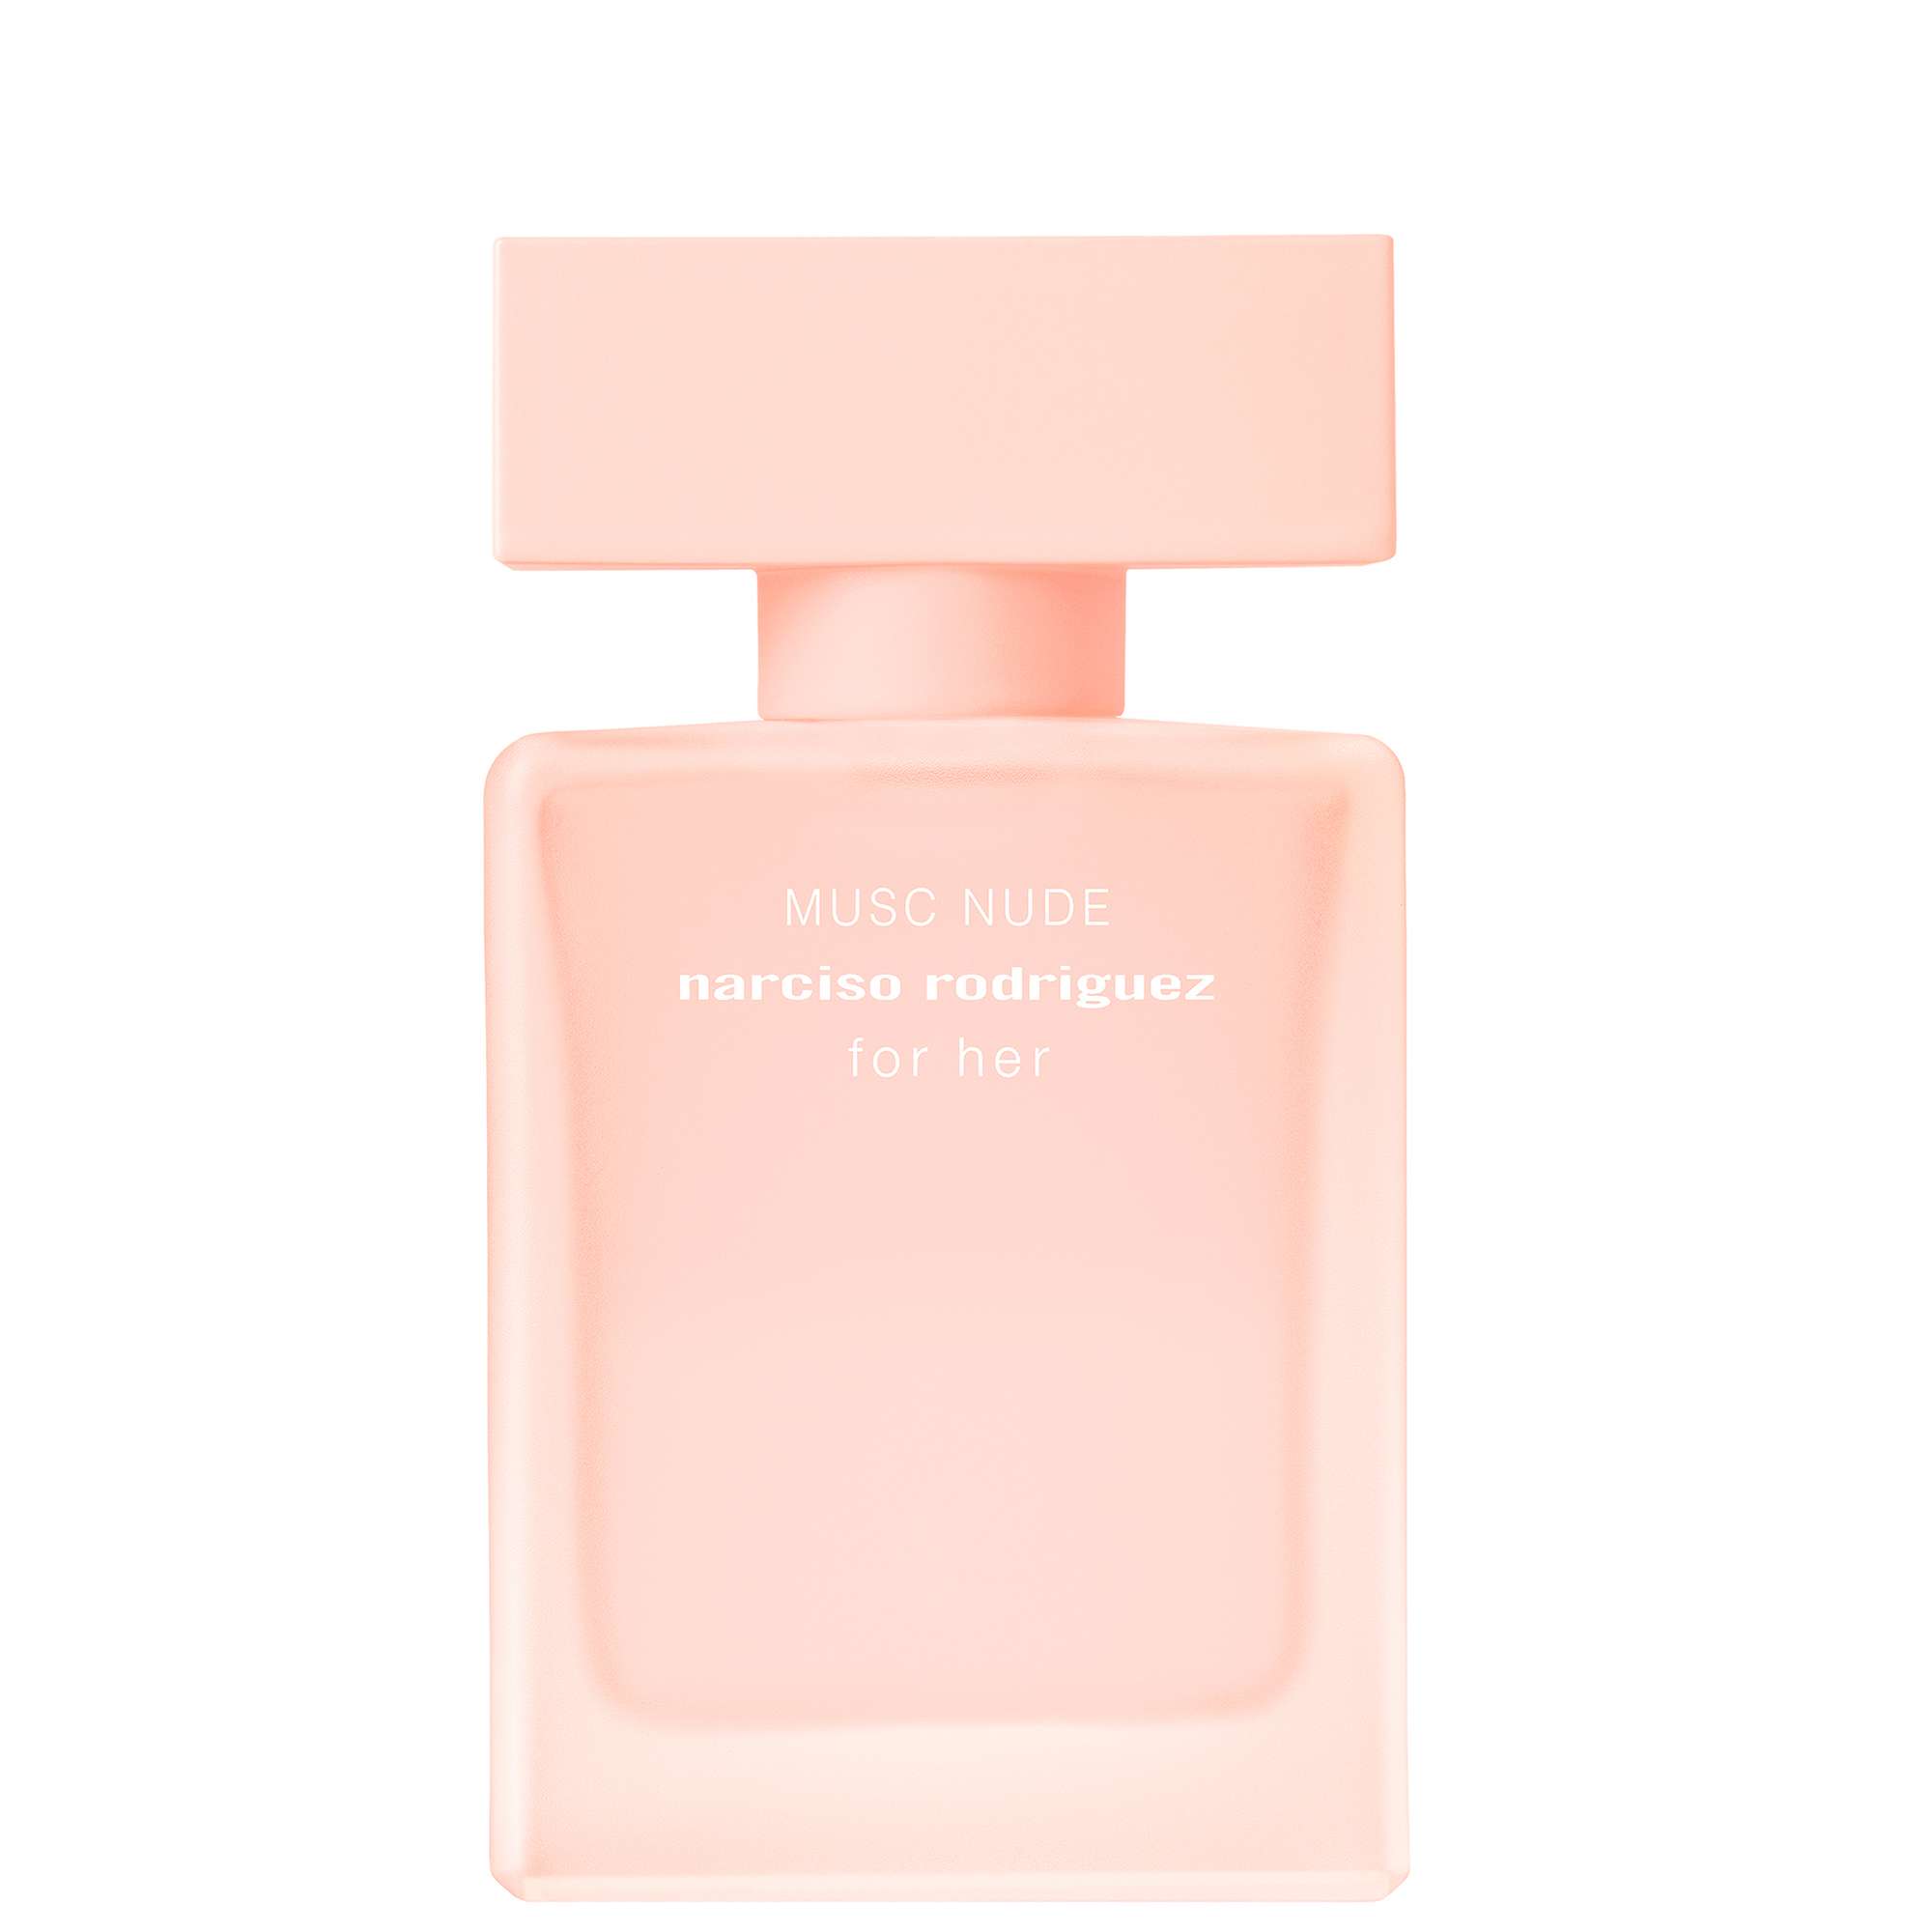 Photos - Women's Fragrance Narciso Rodriguez For Her Musc Nude Eau de Parfum Spray 30ml 